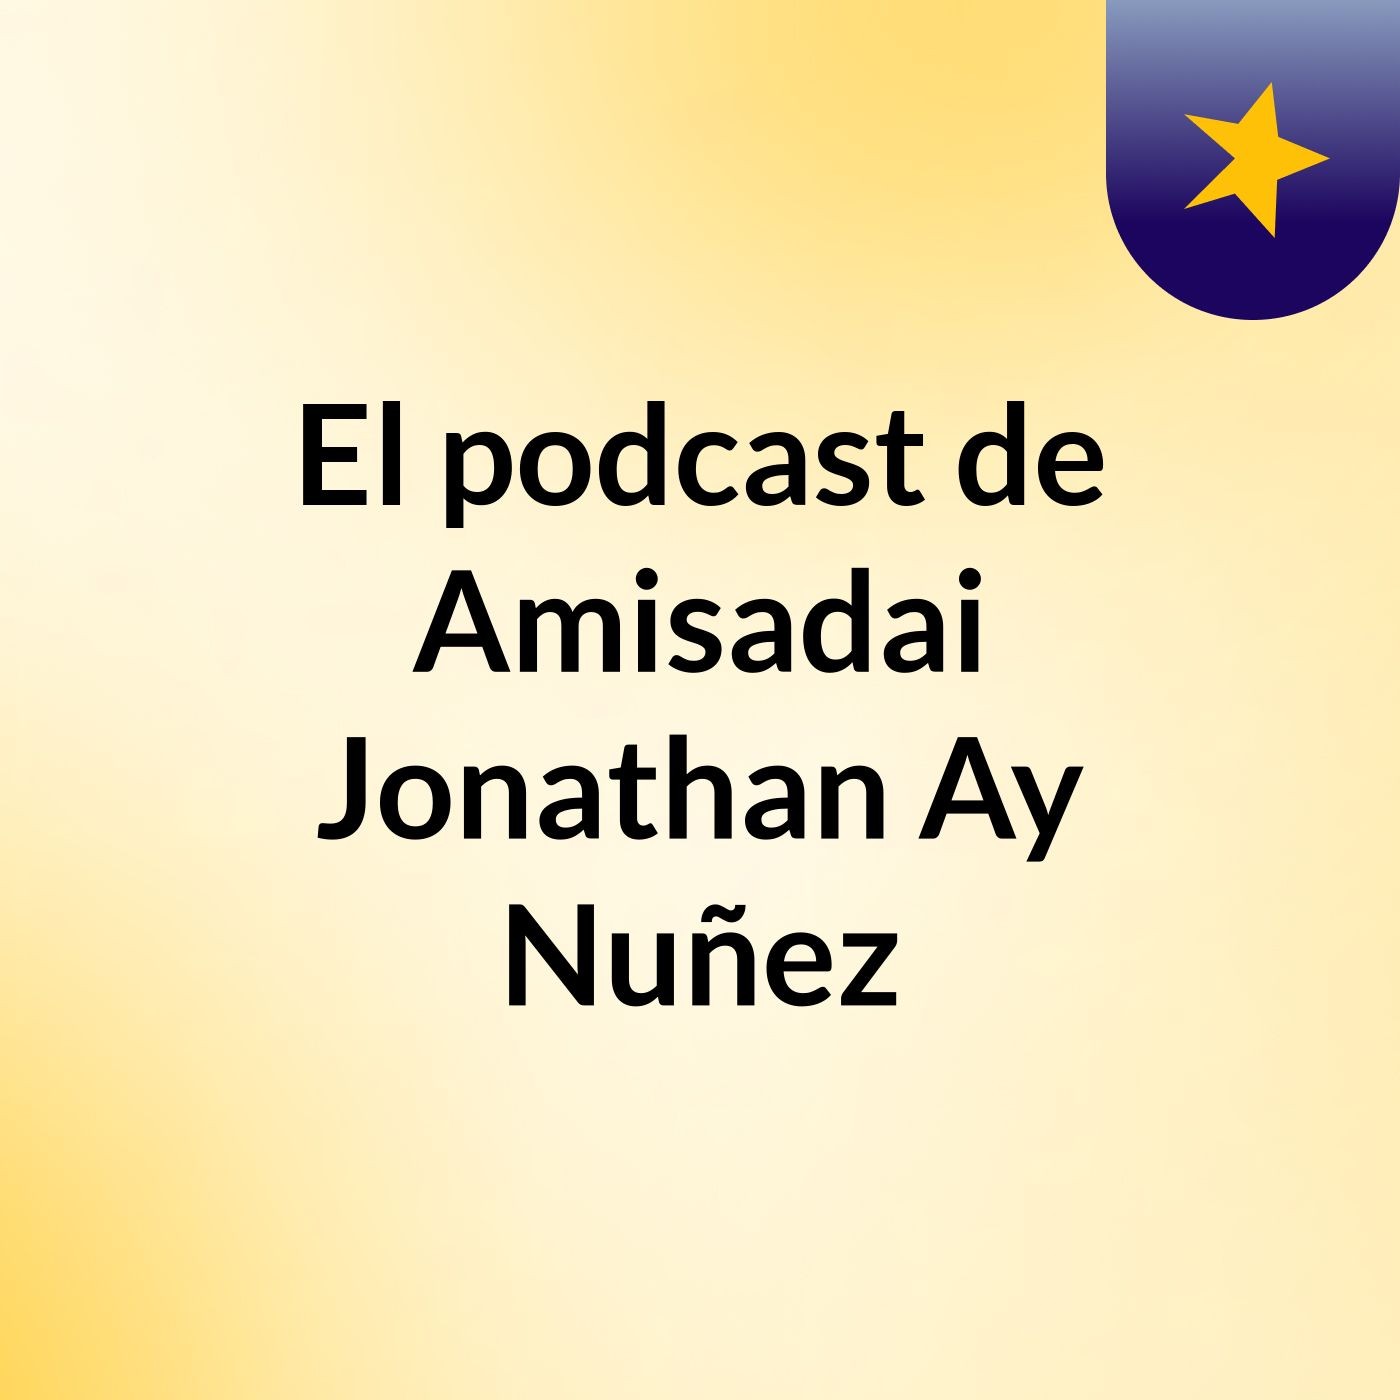 El podcast de Amisadai Jonathan Ay Nuñez